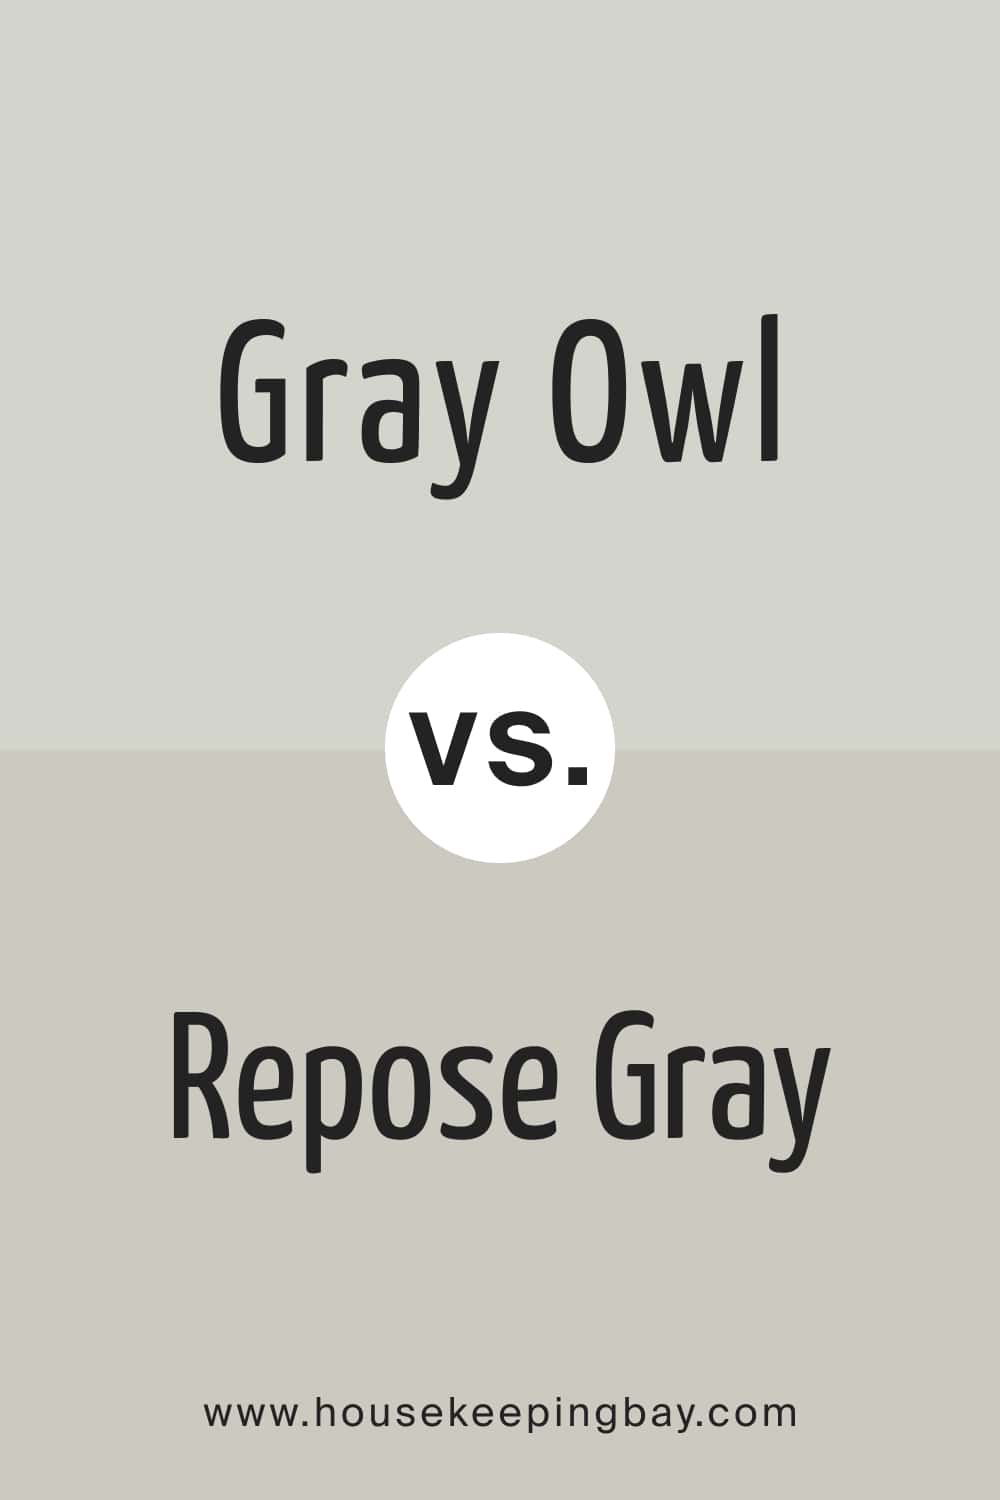 Gray Owl vs. Repose Gray